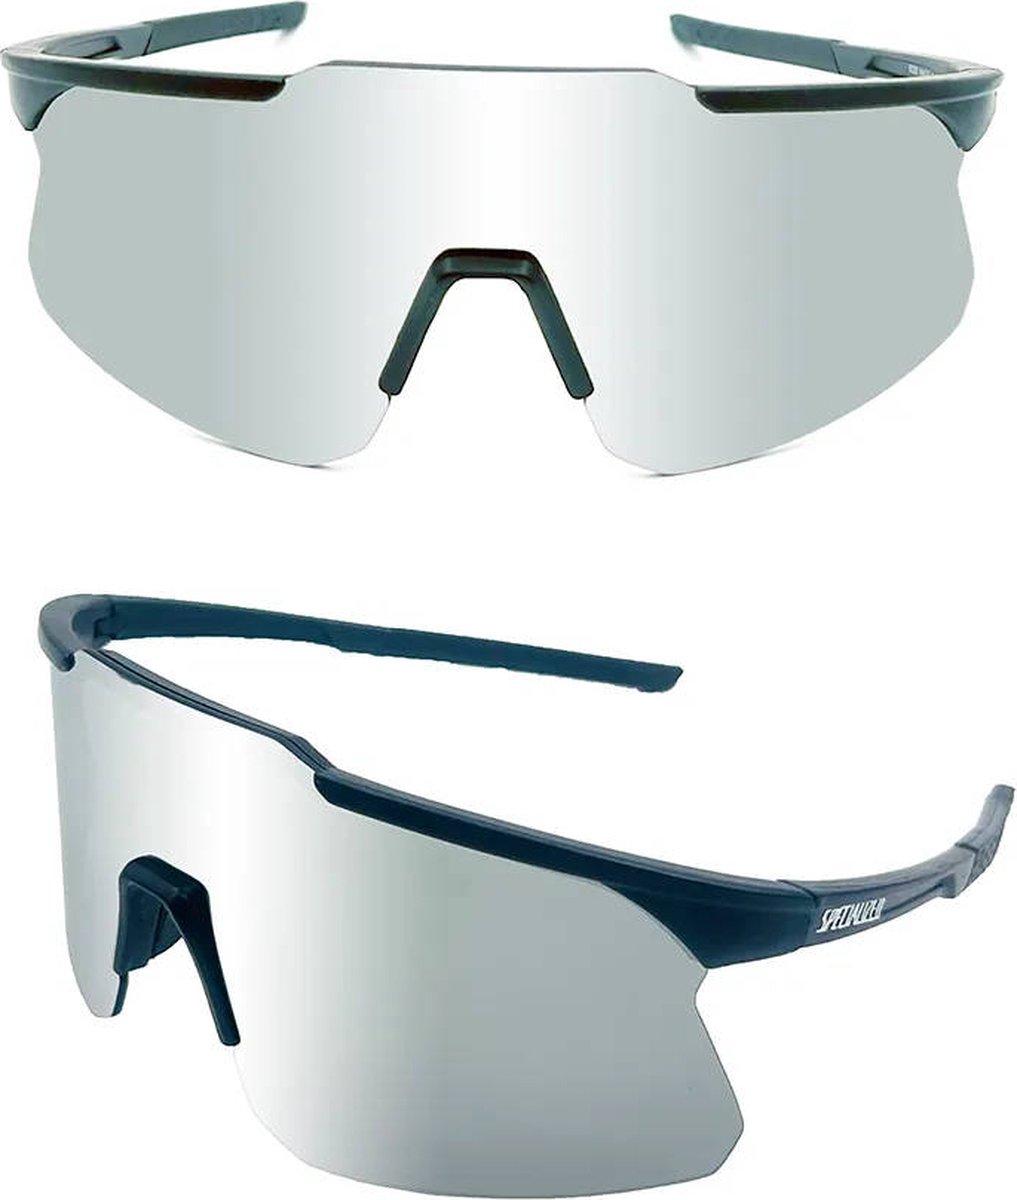 Specialized Fietsbril - Racefiets - Sportbril - Mountainbike - Unisex - UV-bescherming - 155mm - Zilver